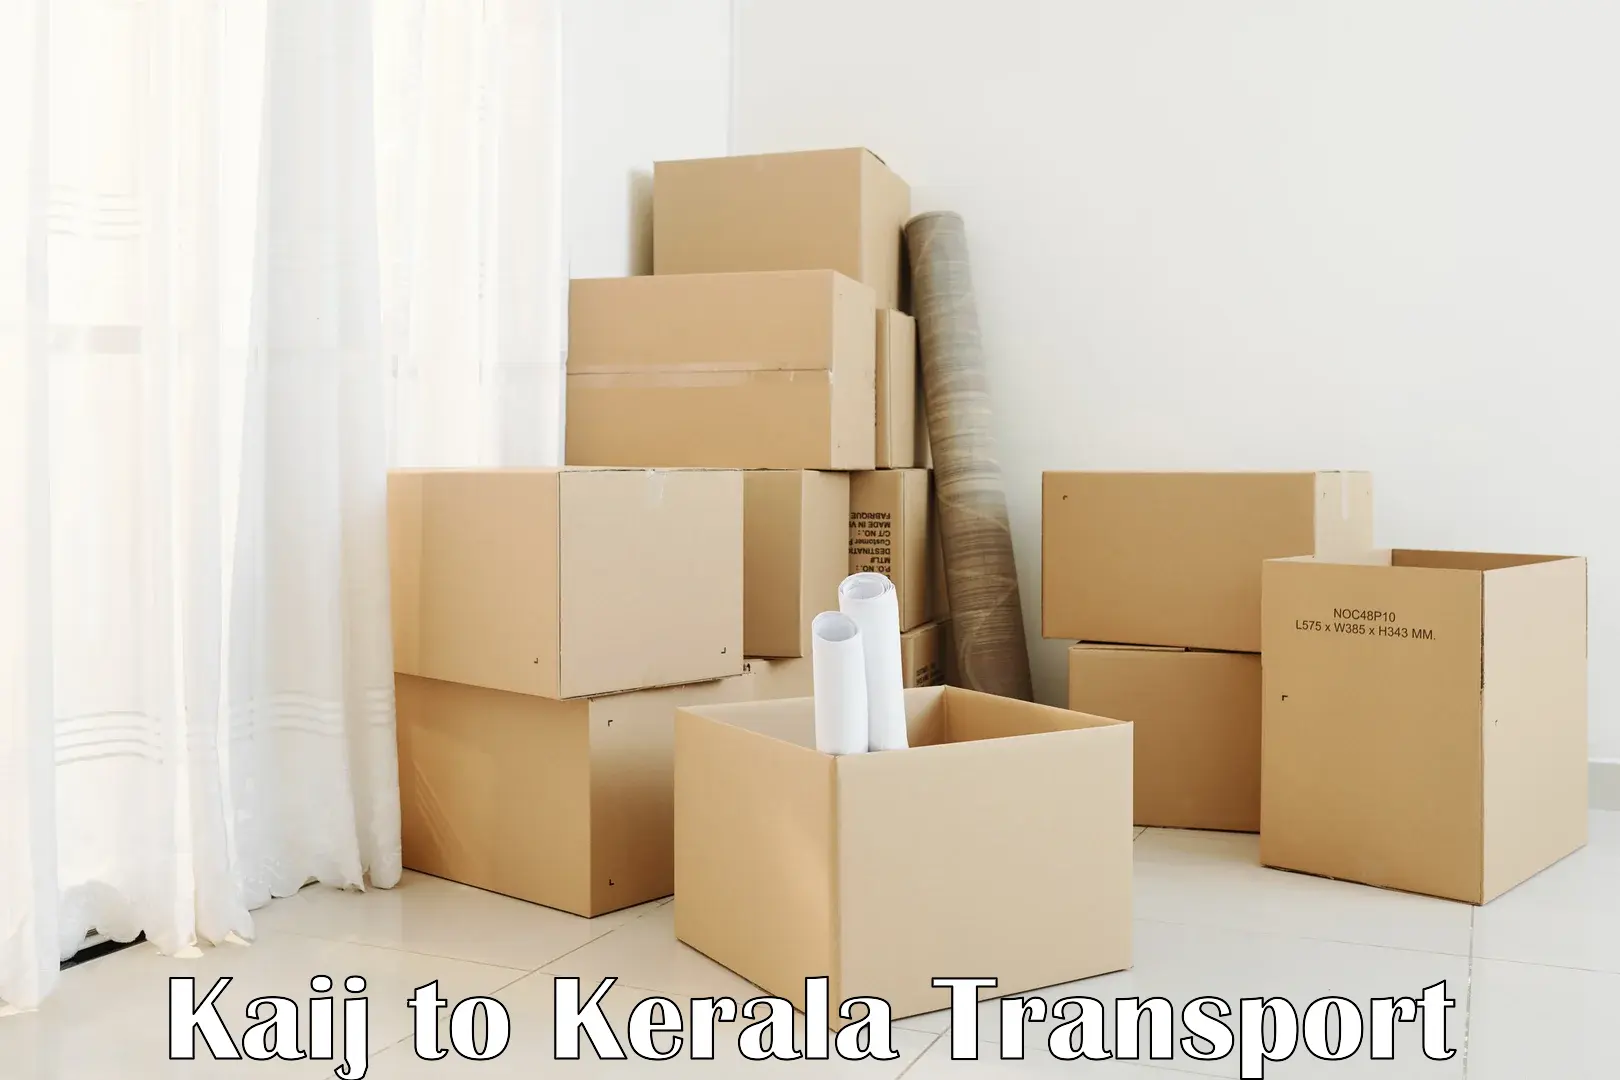 Commercial transport service Kaij to Kerala